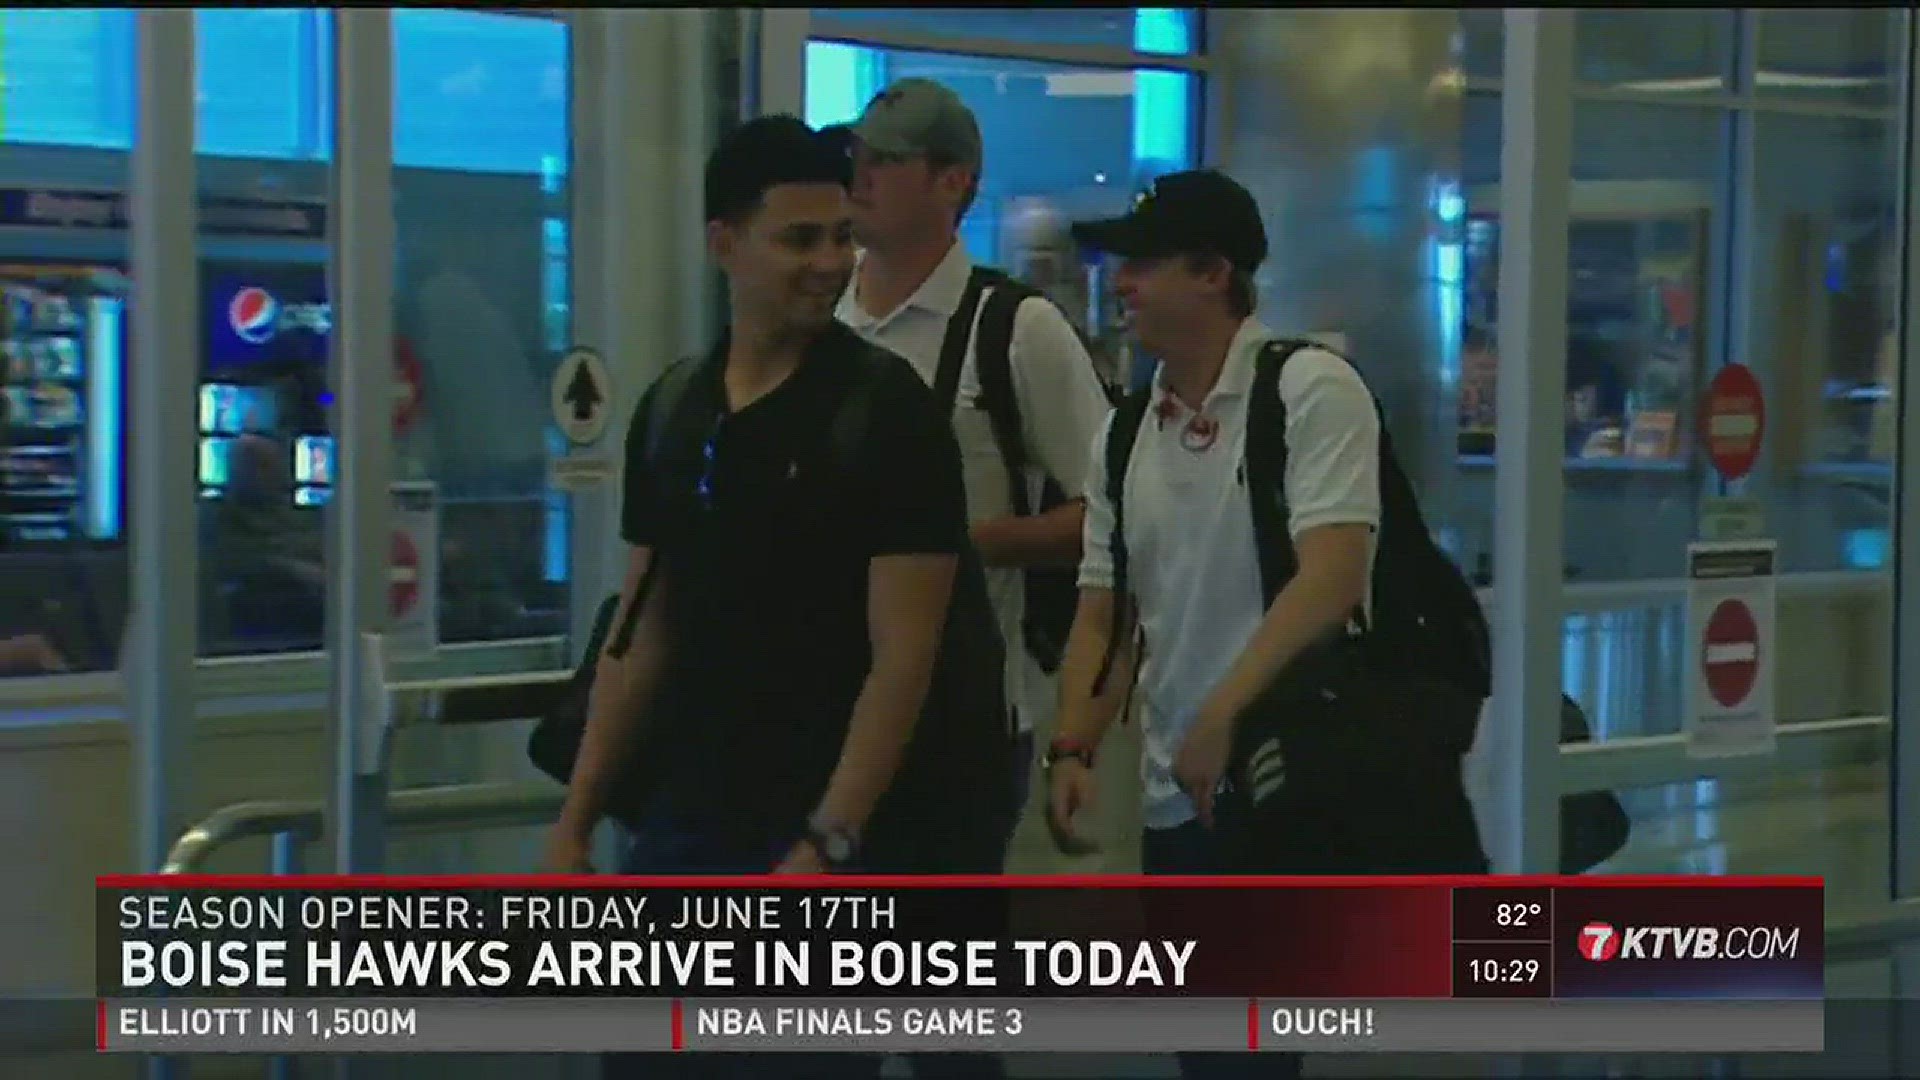 Members of the Boise Hawks baseball team arrived in Boise Wednesday just days before the start of the 2016 season.